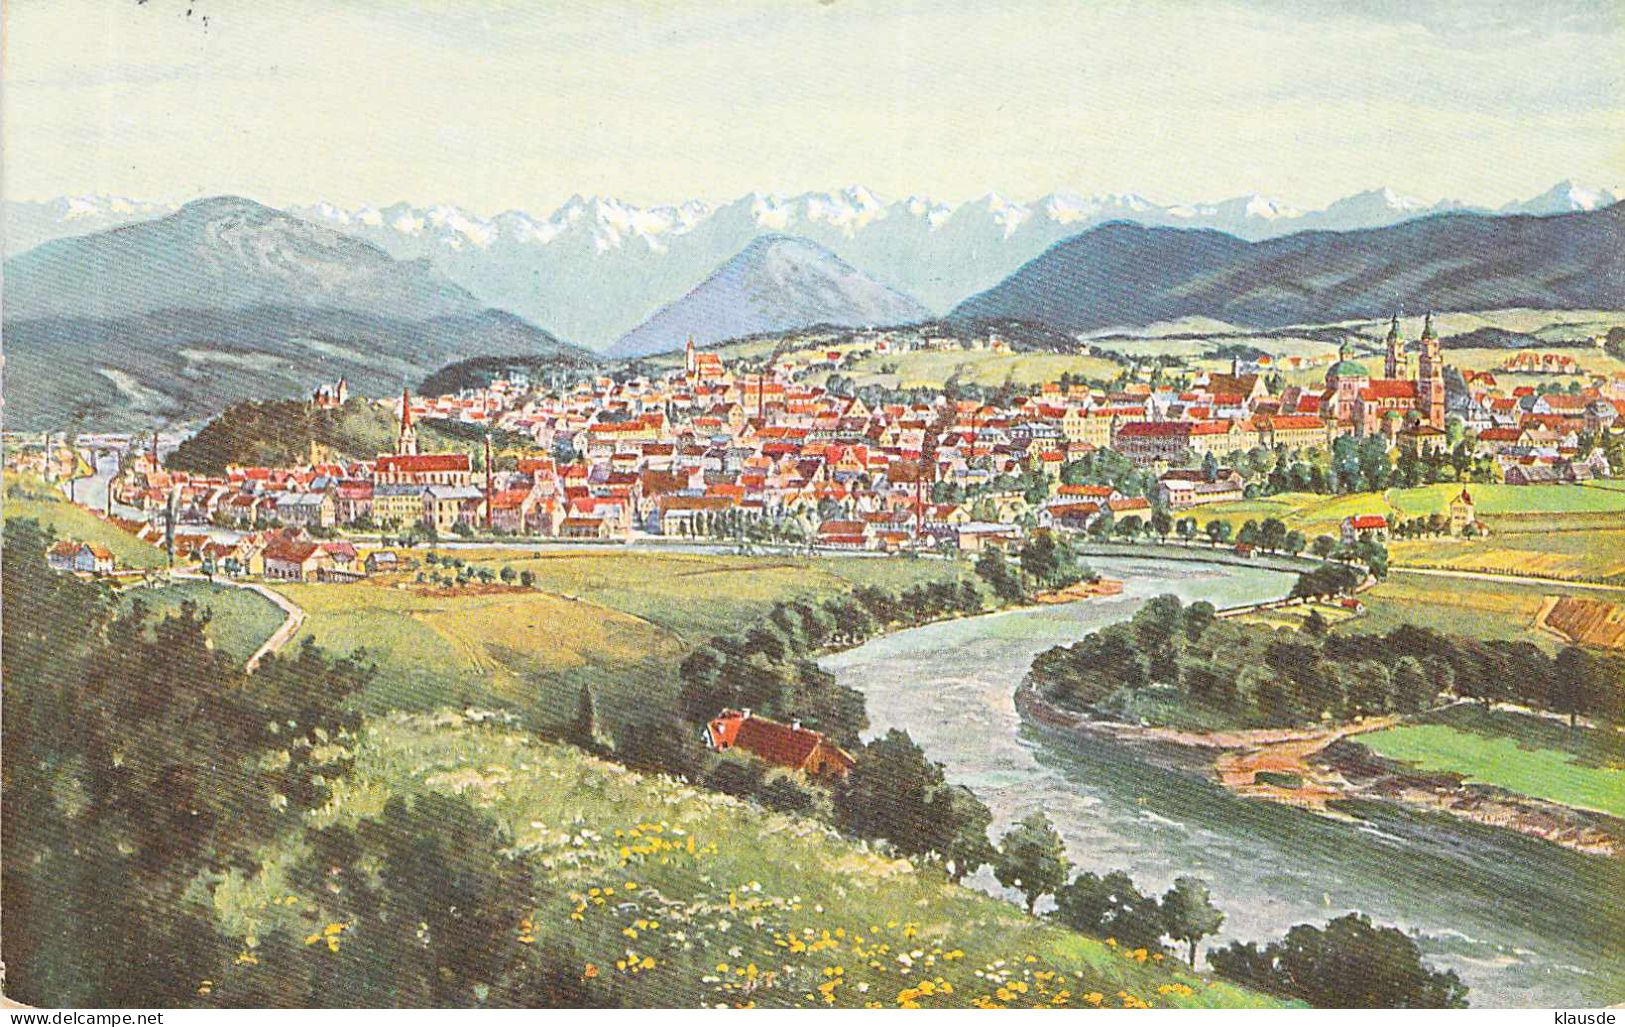 Kempten - Künstlerkarte Panorama Gel.1928 - Kempten